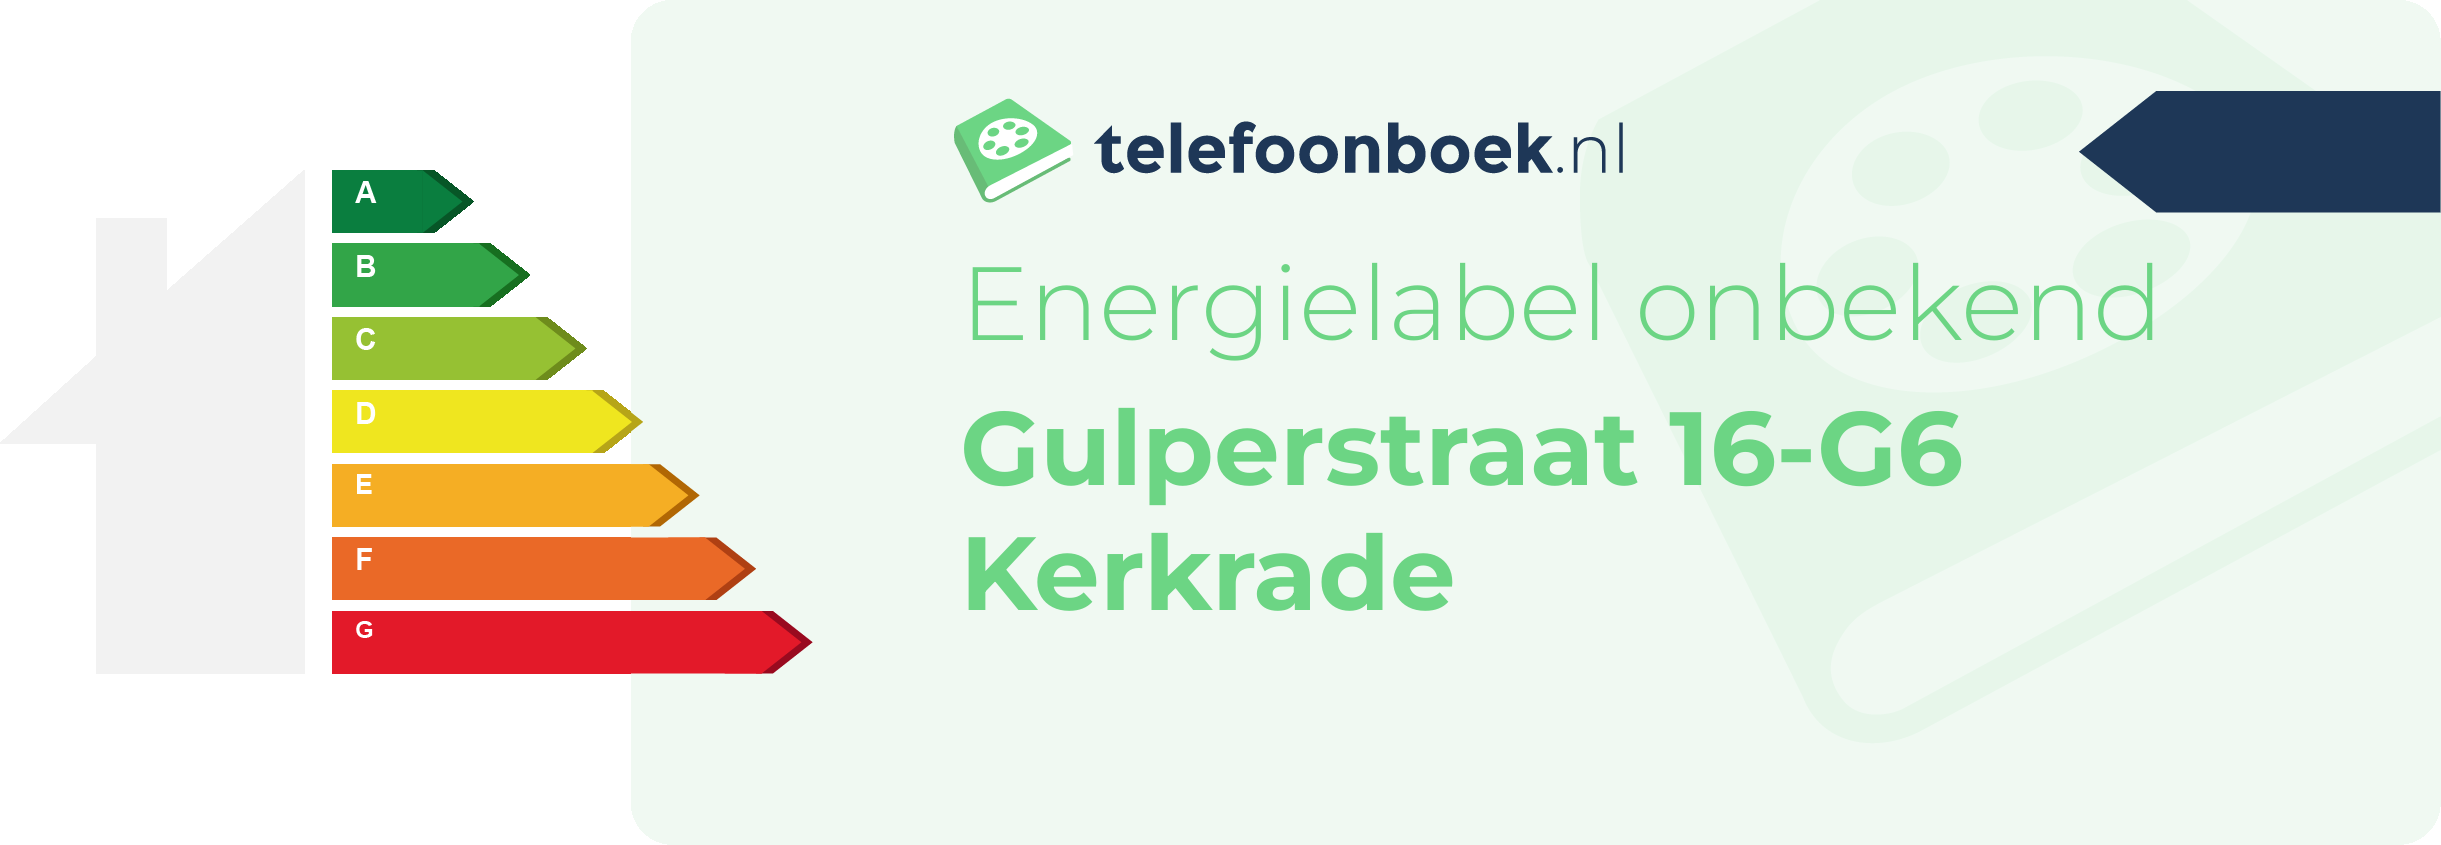 Energielabel Gulperstraat 16-G6 Kerkrade